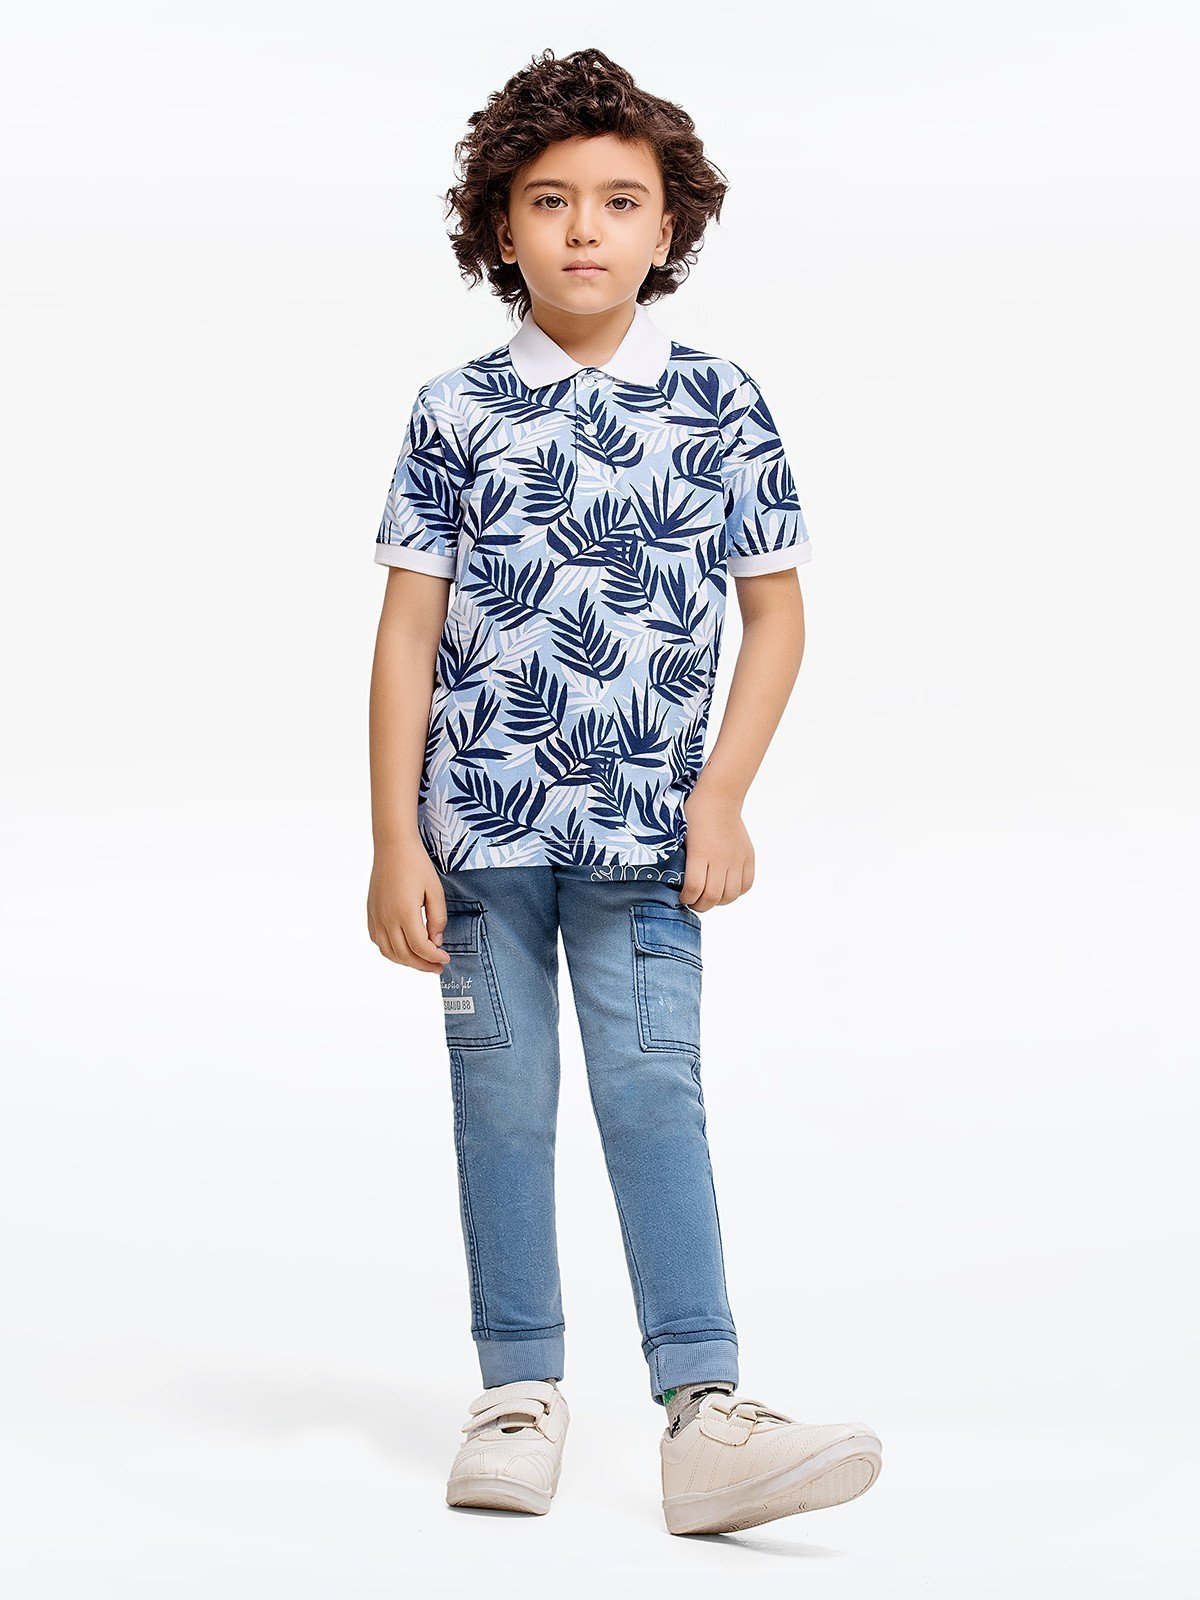 Boy's Blue & White Polo Shirt - EBTPS23-026